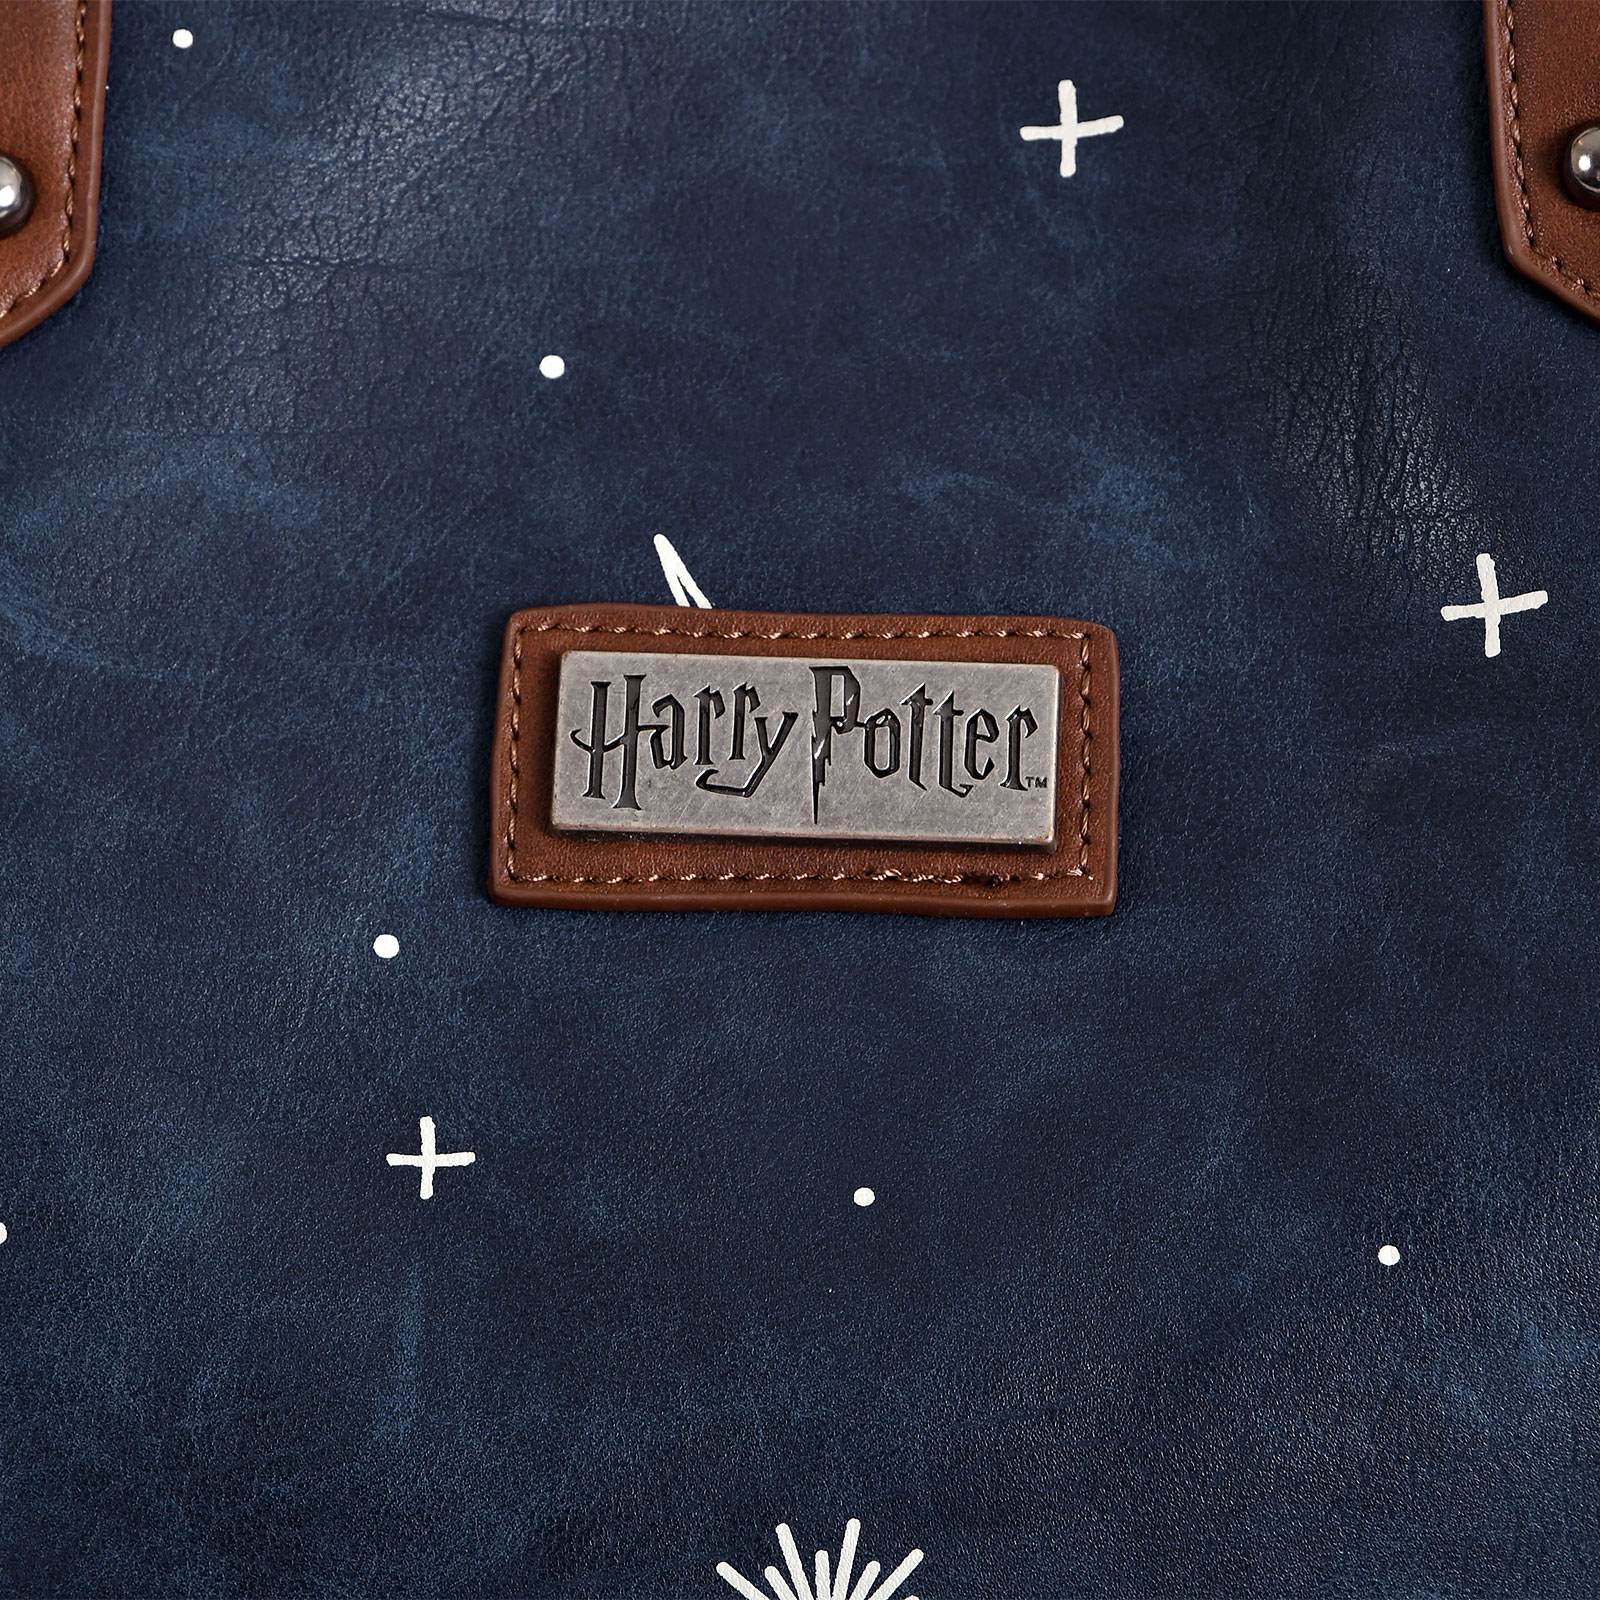 Harry Potter - Marauder's Map Shopper Bag